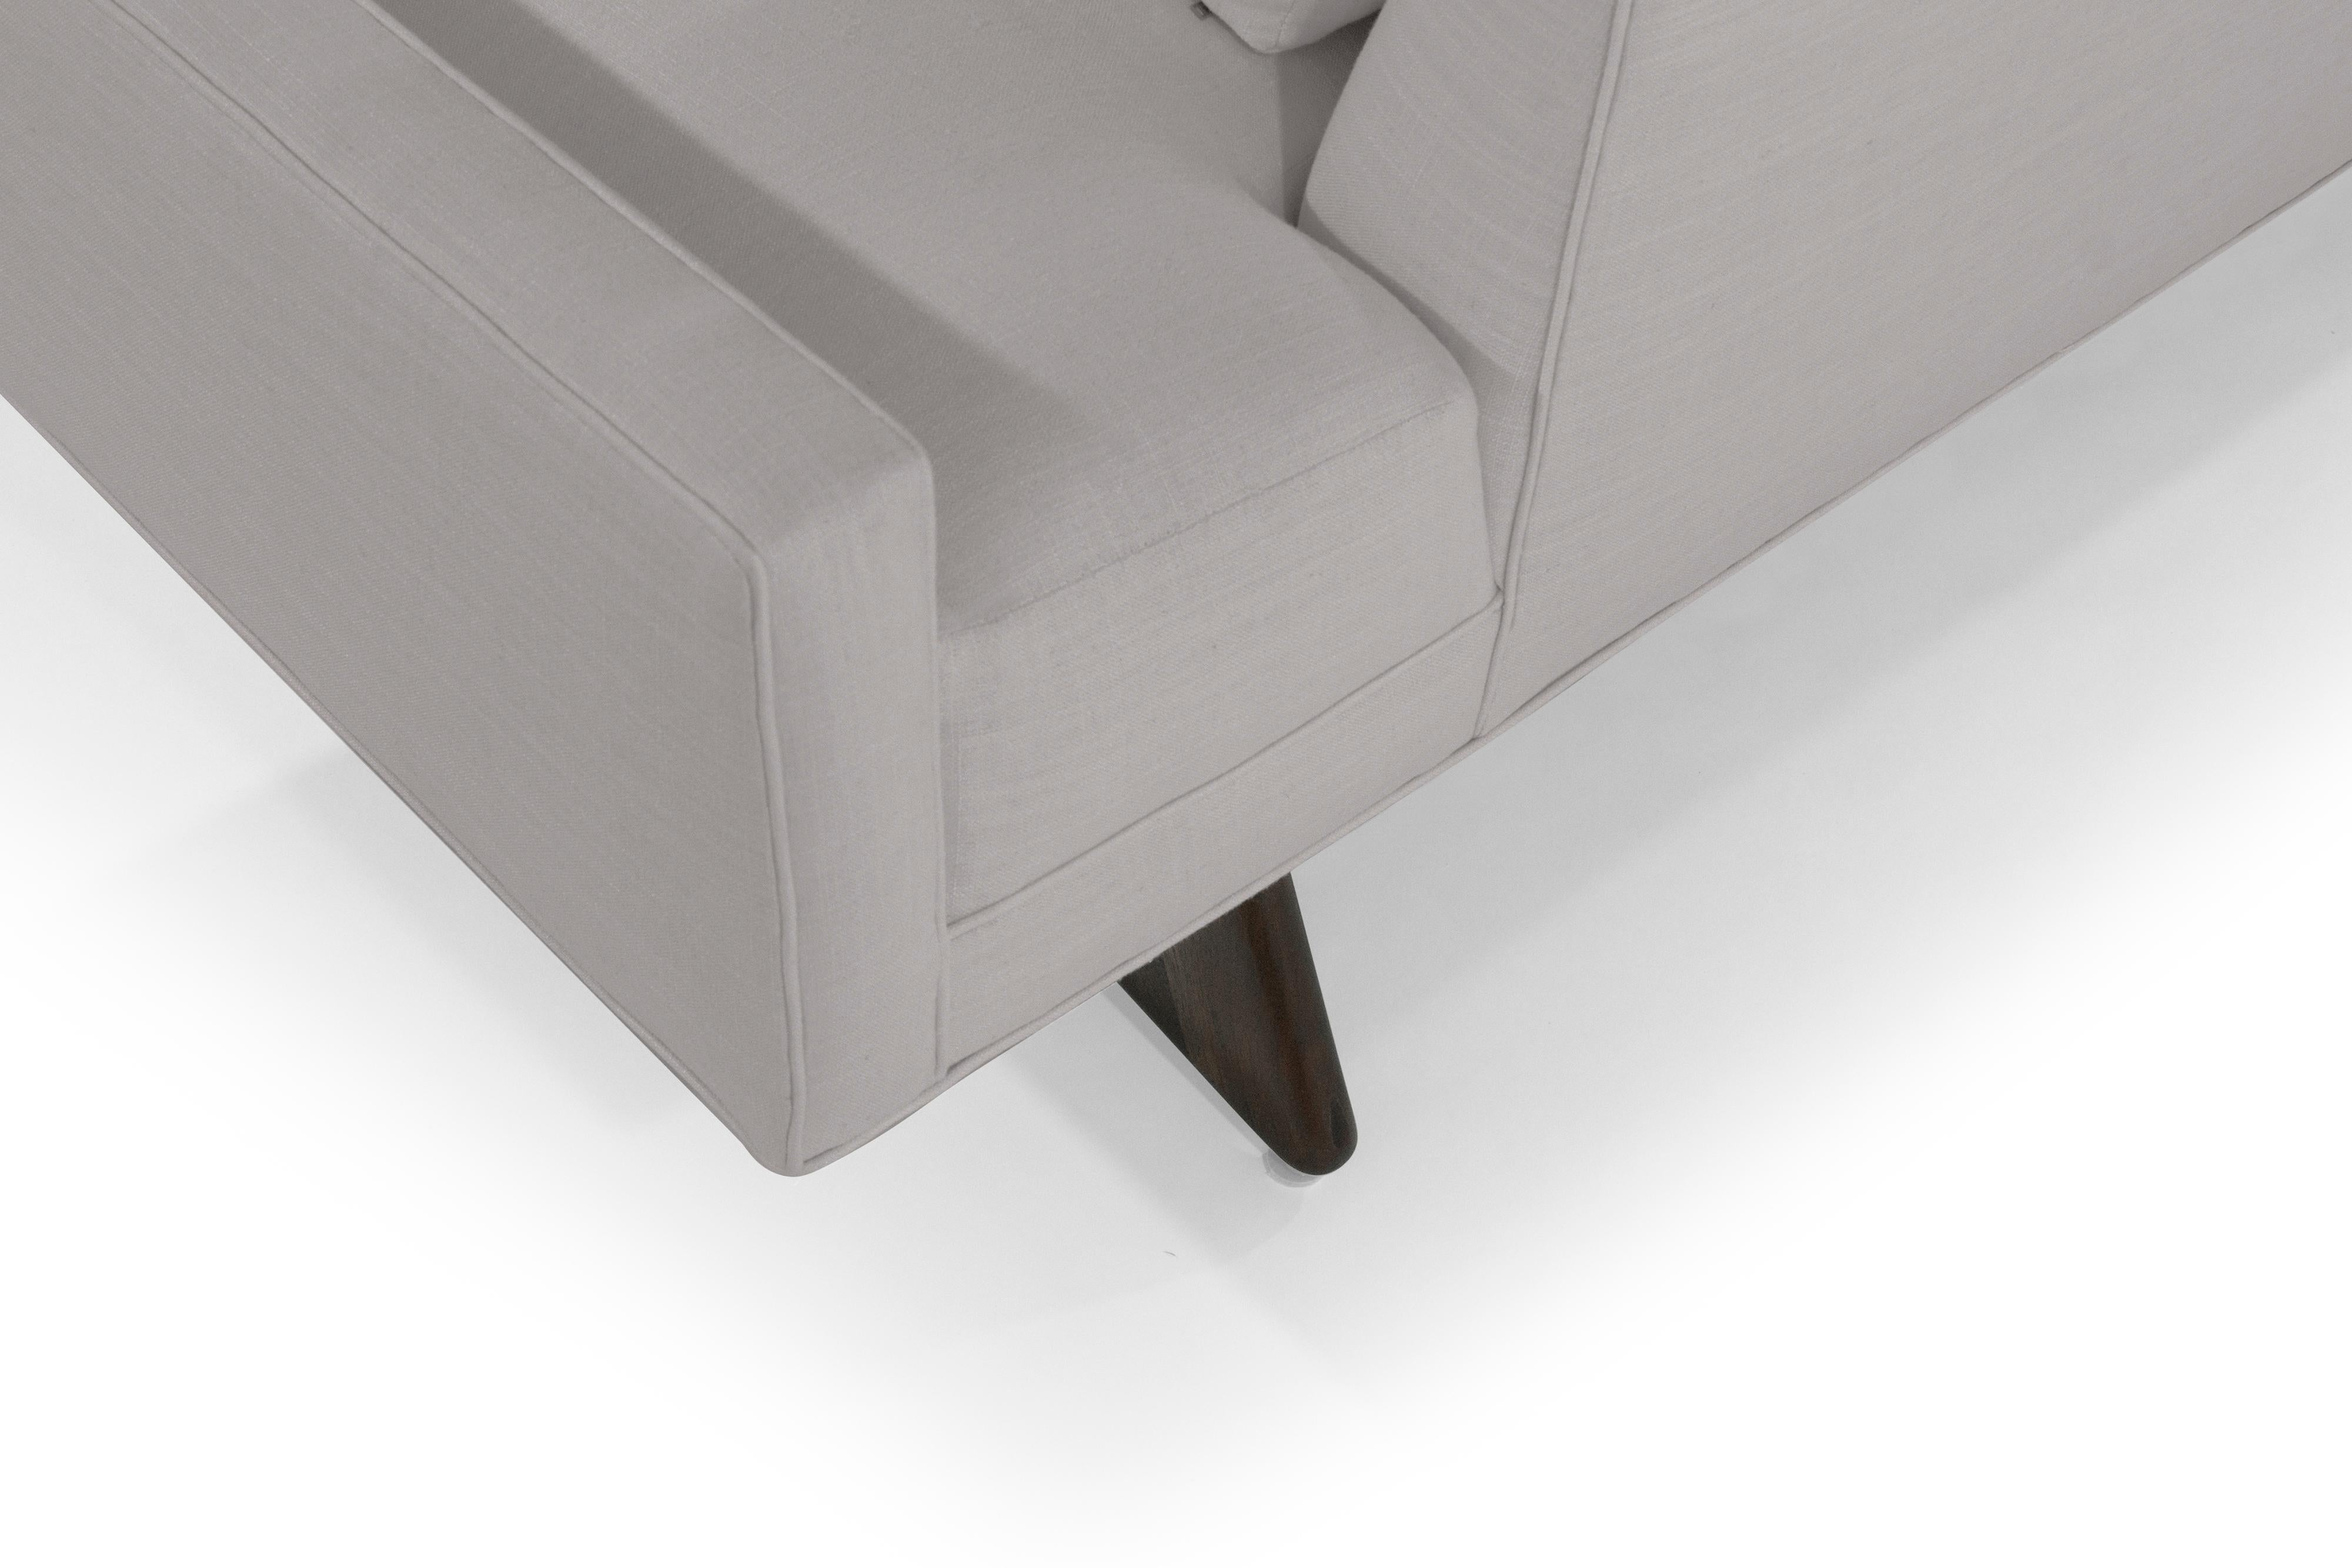 Linen Adrian Pearsall for Craft Associates Sofa, Model 2408